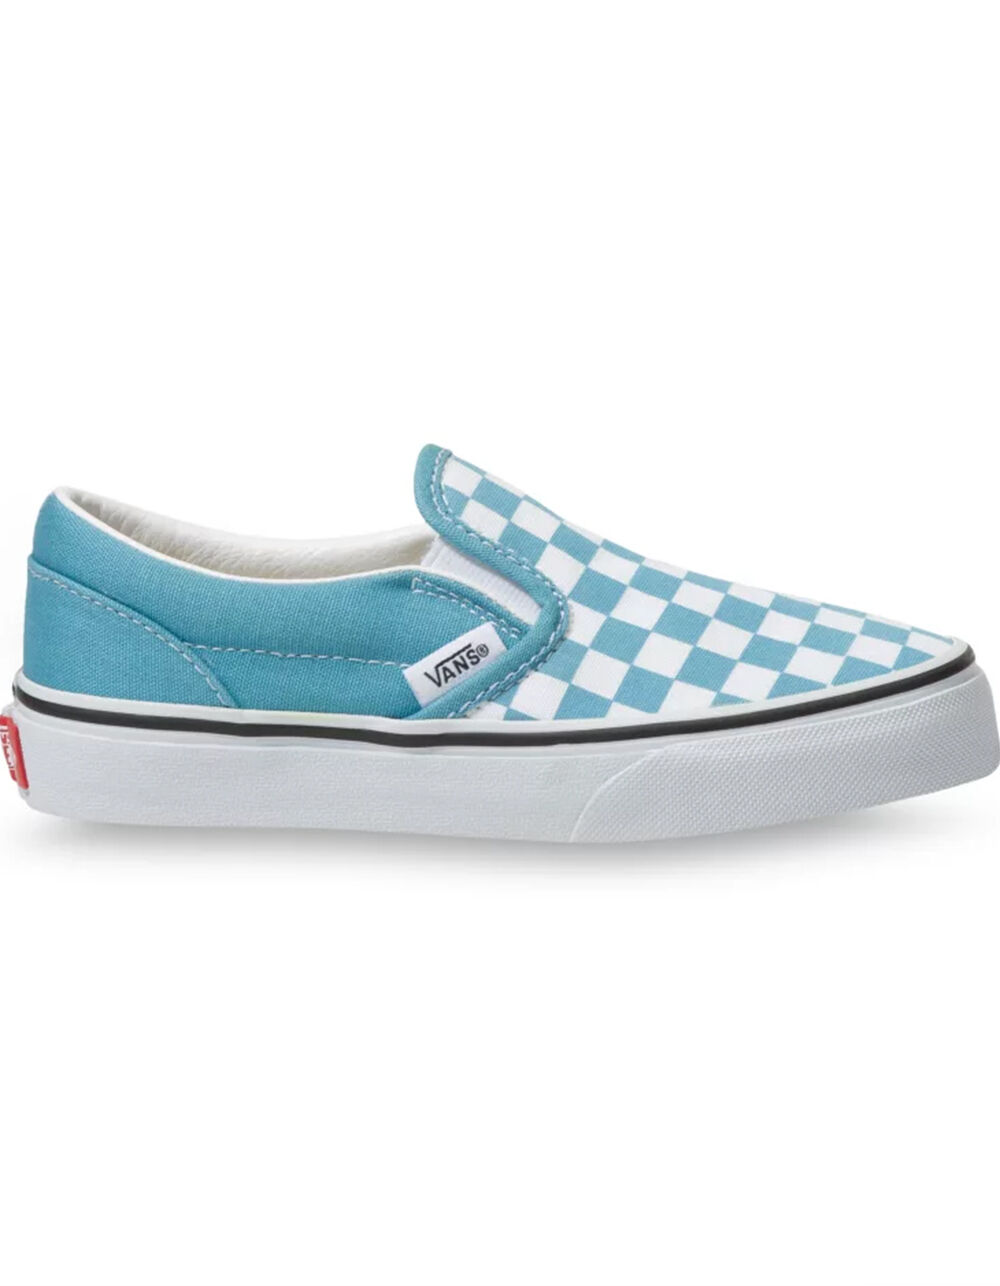 VANS Checkerboard Classic Slip-On Girls Shoes - DELPHINIUM BLUE/TRUE ...